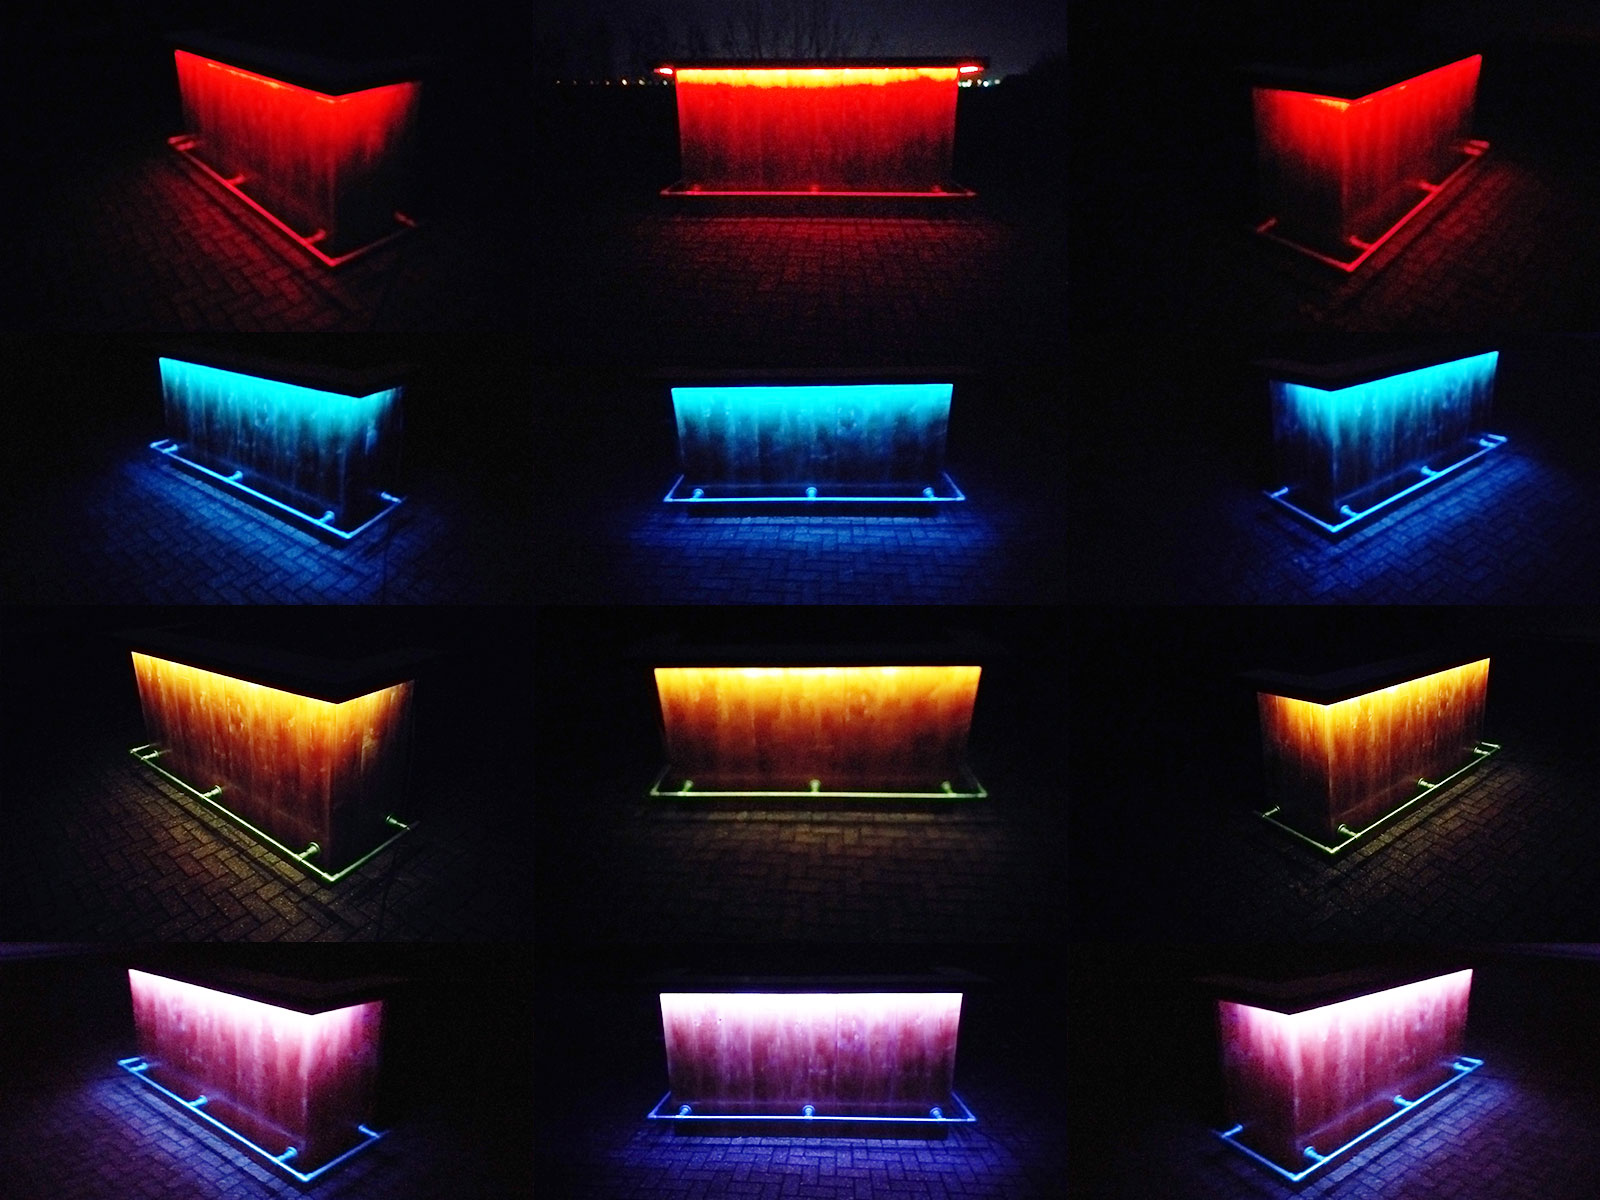 Steigerhouten bar met led verlichting, verschillende kleuren led